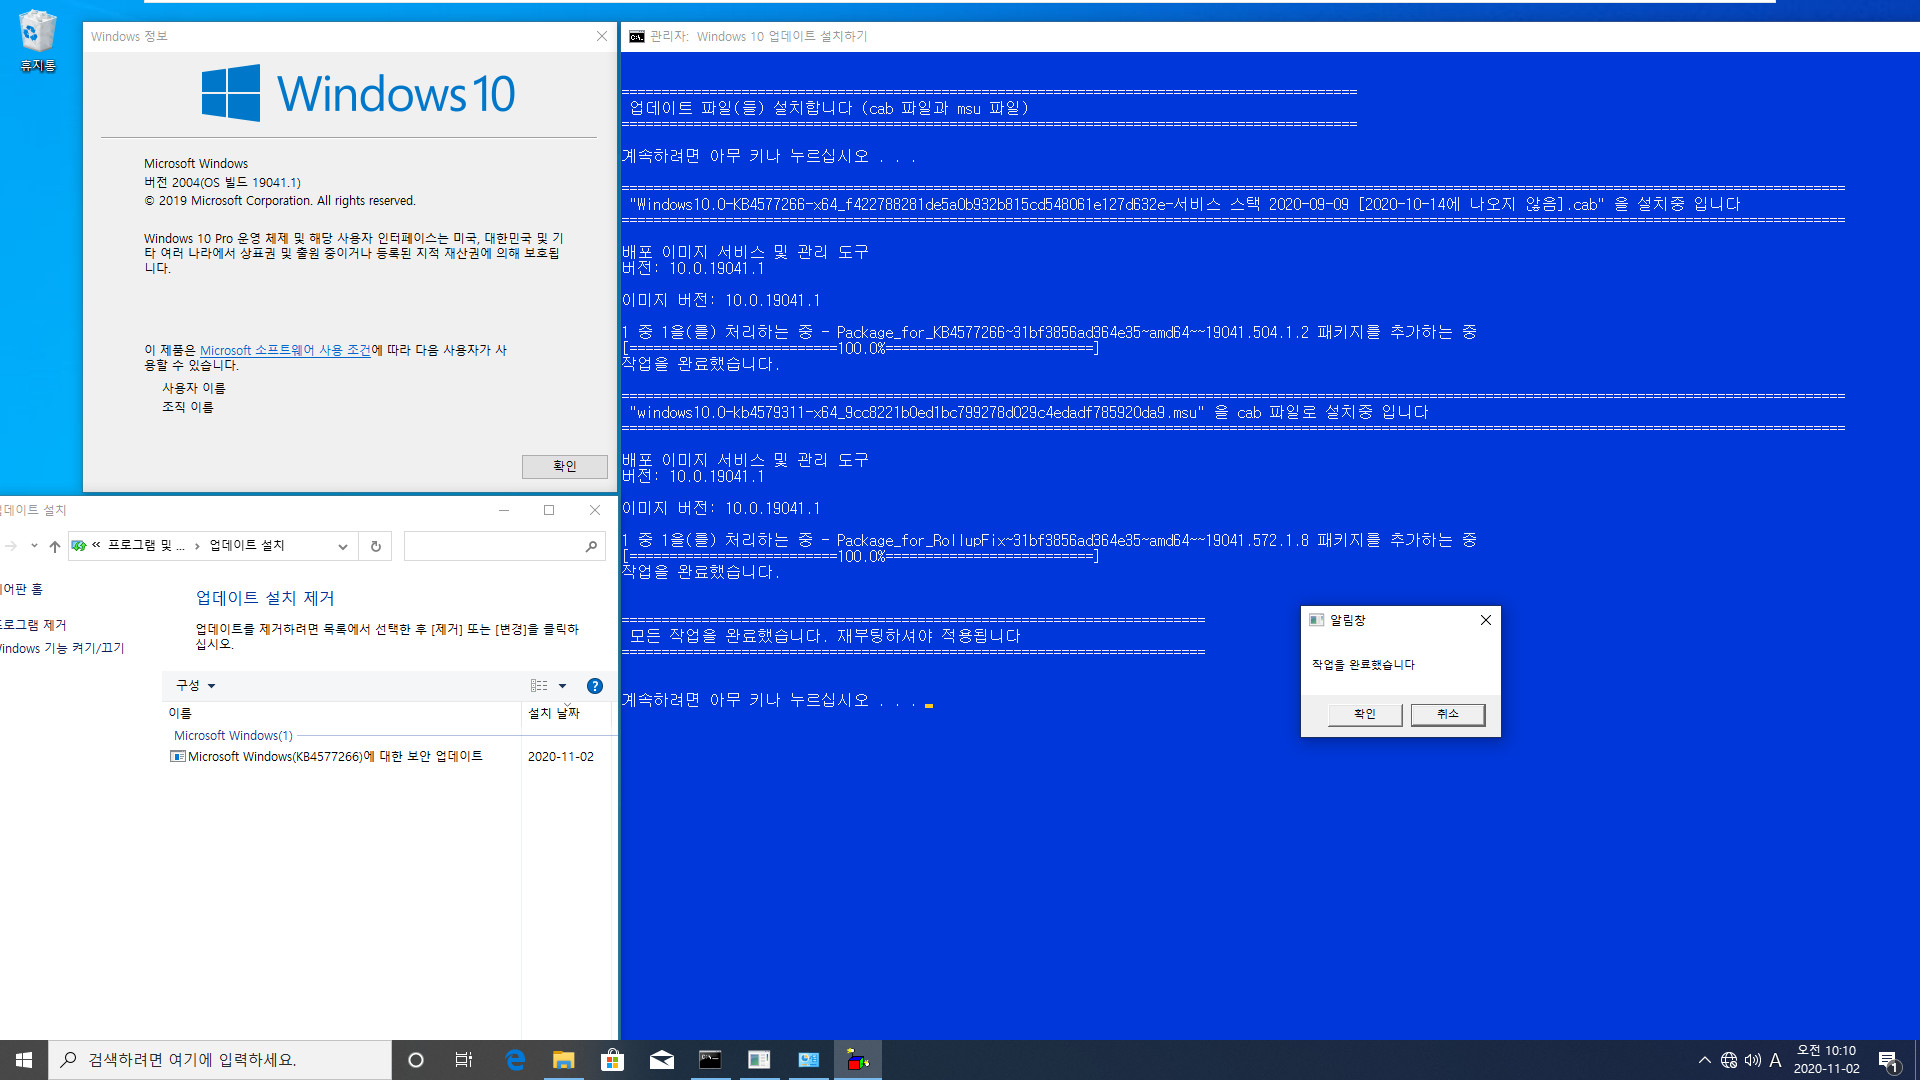 Windows 10 버전 20H2 기능 업데이트 KB4562830 폴더의 mum 파일들만 찾아서 설치하기.bat - 크로미엄 엣지 설치하지 않고 버전 20H2만 설치하기 테스트 - 뻘짓했네요 2020-11-02_101040.jpg